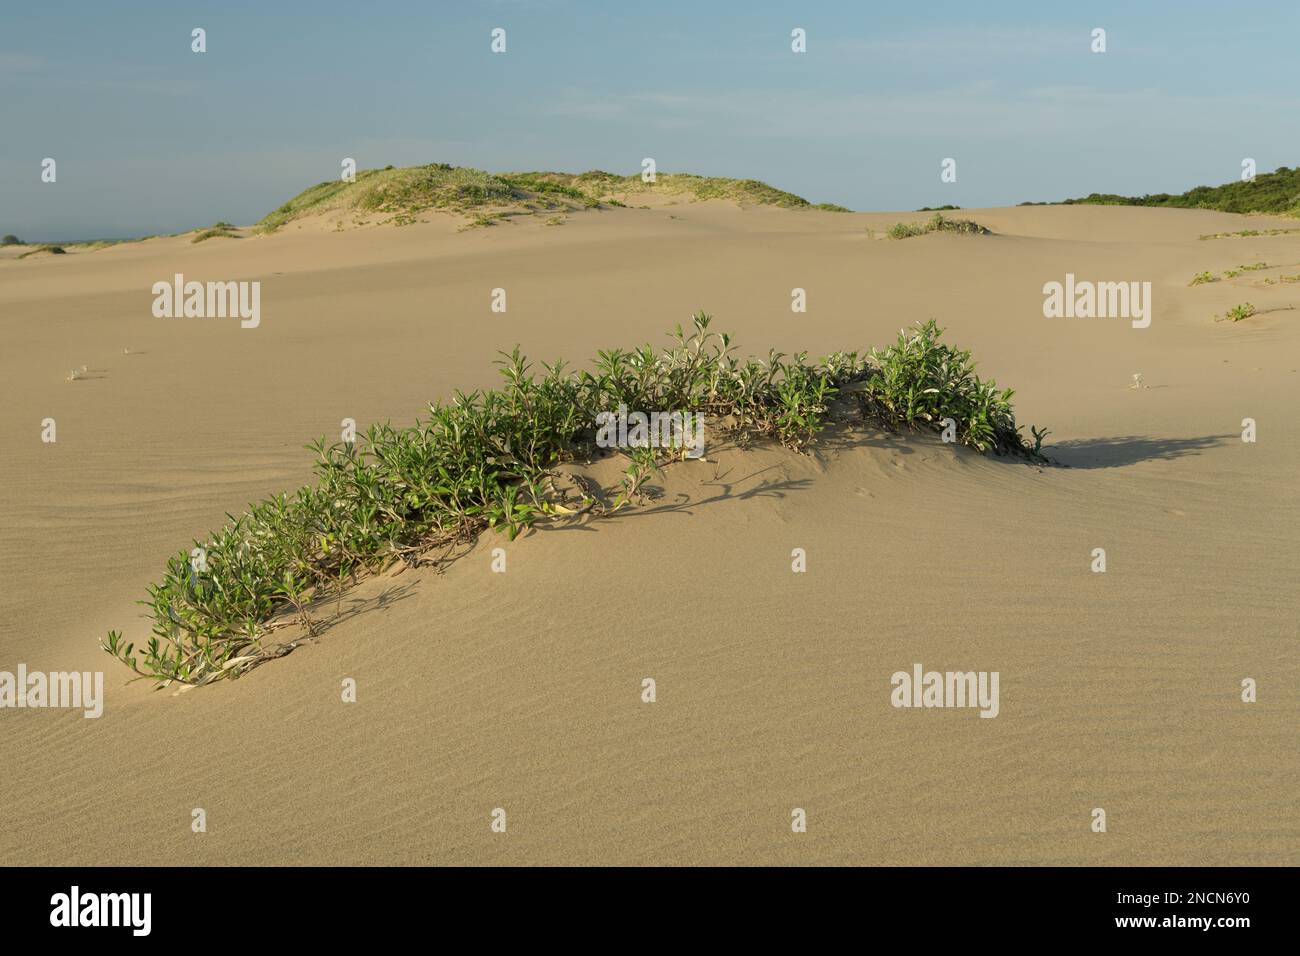 Beautiful pioneer plant growing on beach dune, Common Gazania, Gazania krebsiana, Muntanzini, South Africa, beauty in nature, minimal landscape Stock Photo